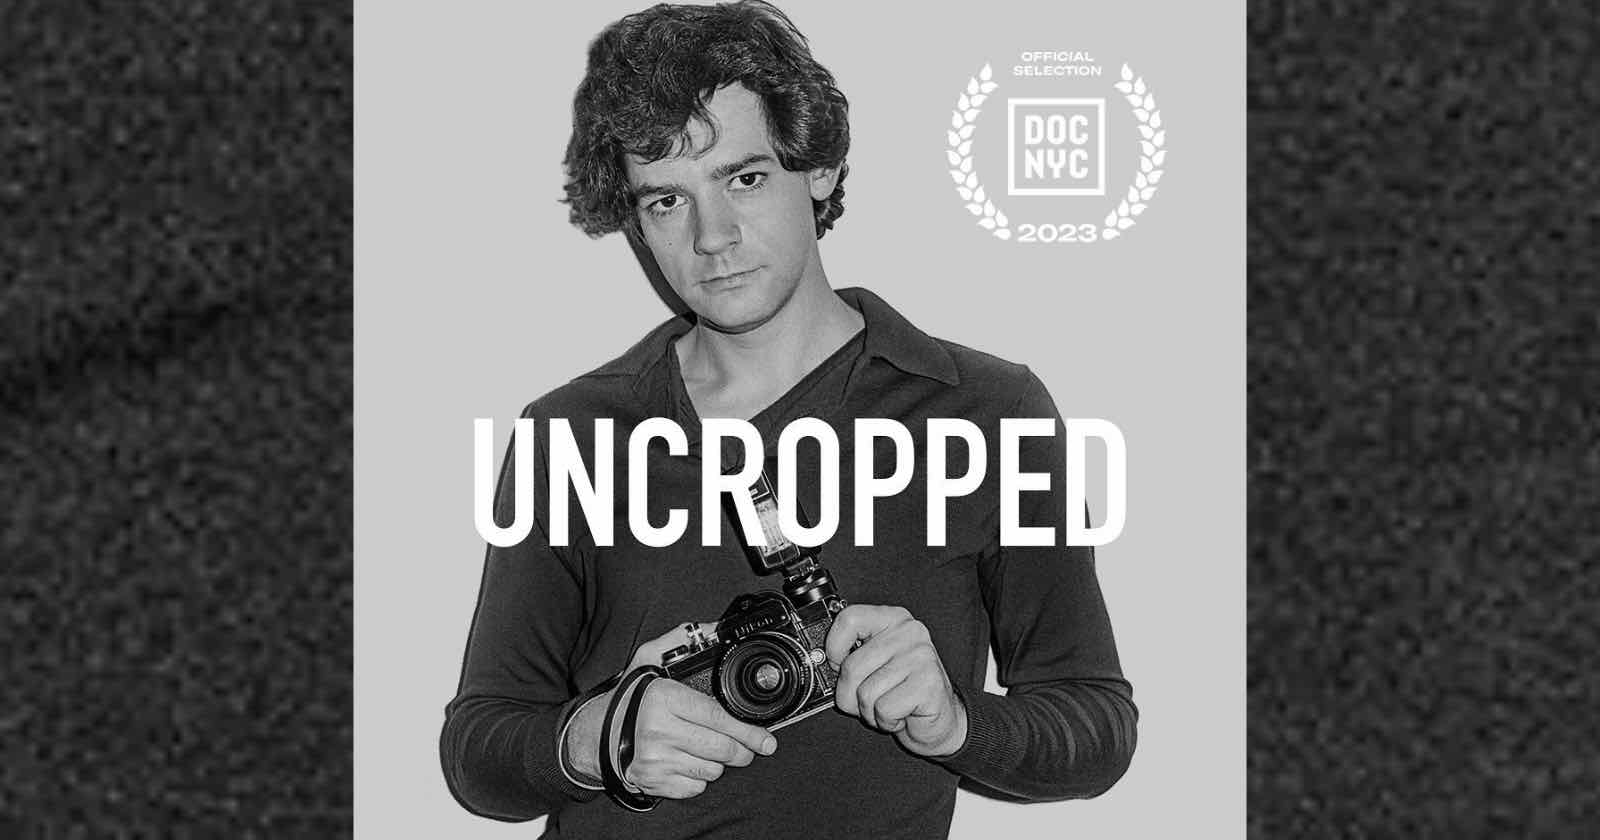 Wes Anderson Produces Documentary on Photographer James Hamilton